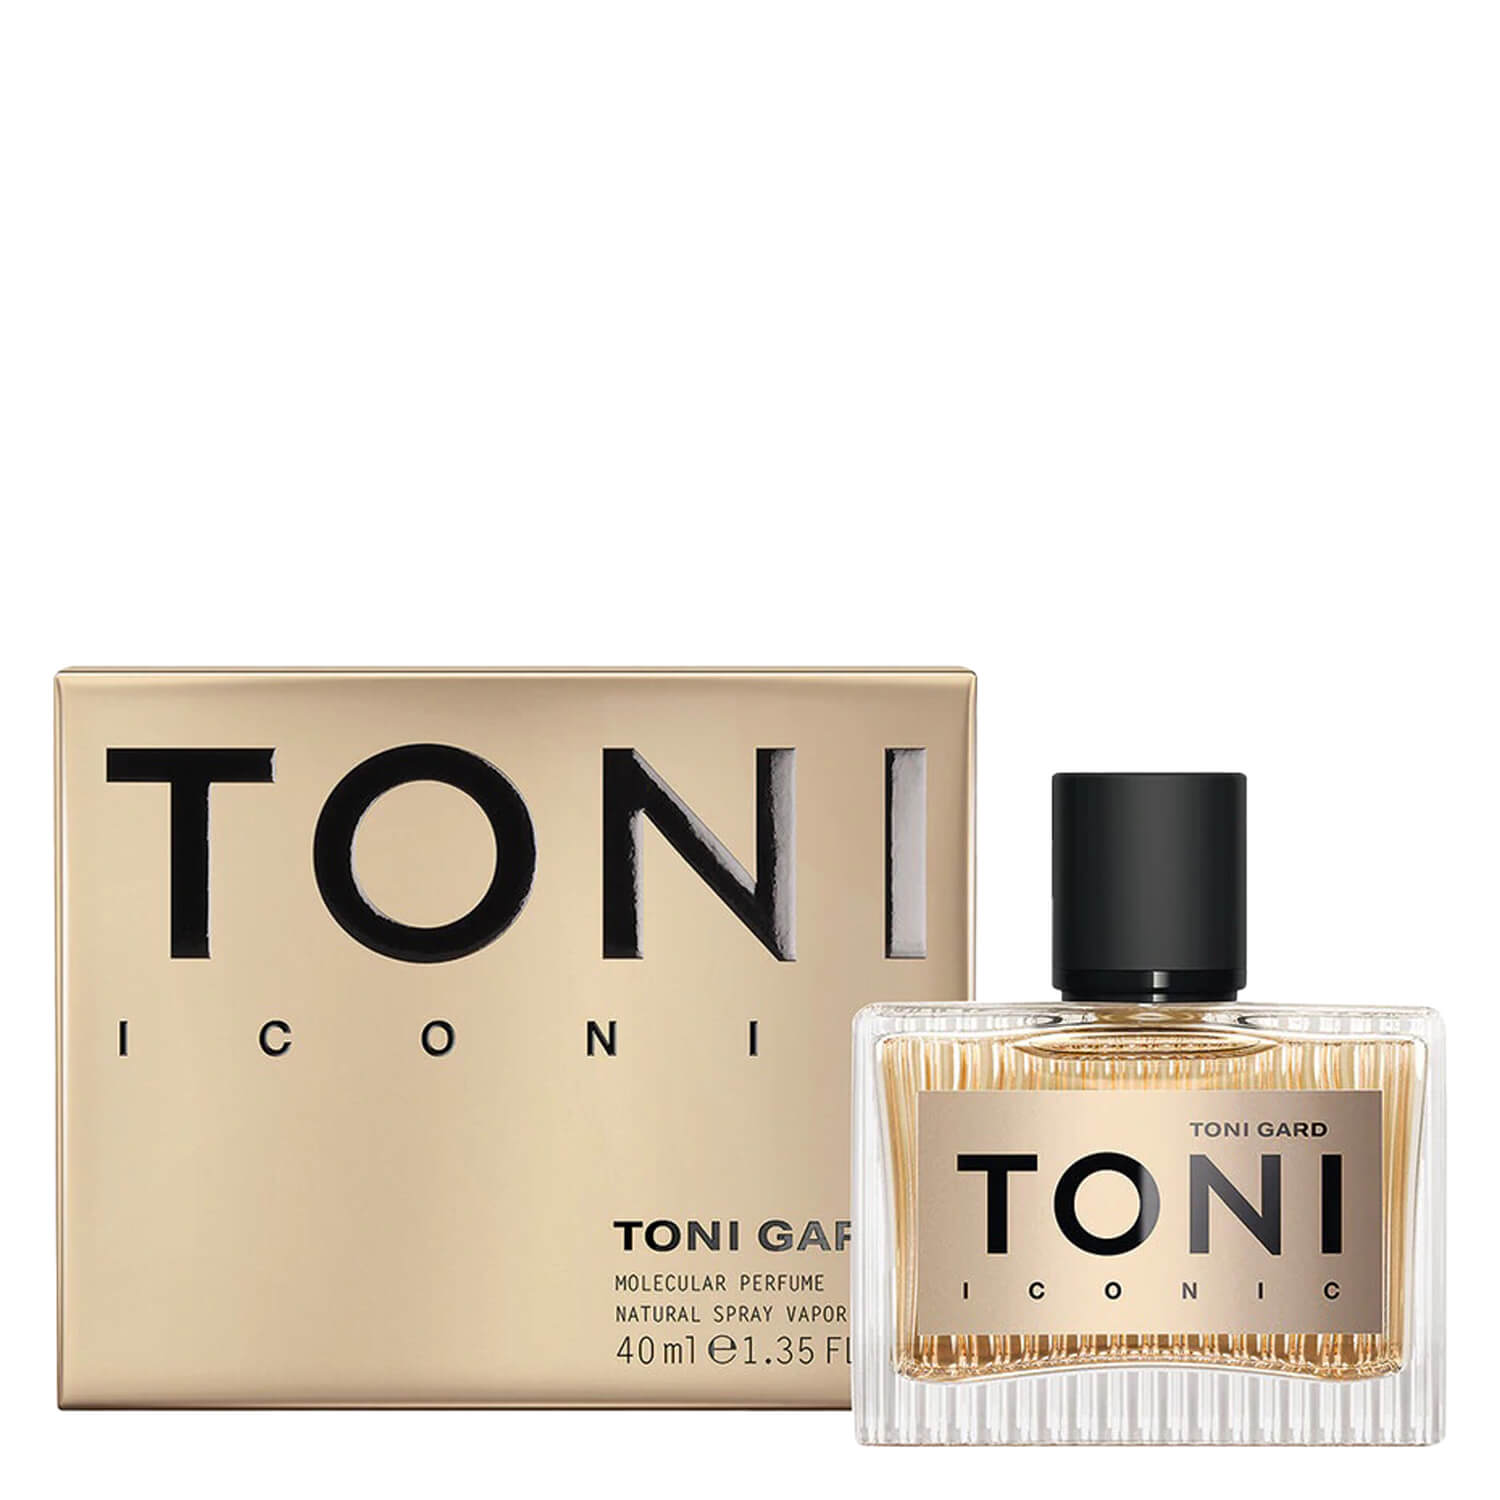 TONI GARD - Toni Eau Parfum de Woman Iconic